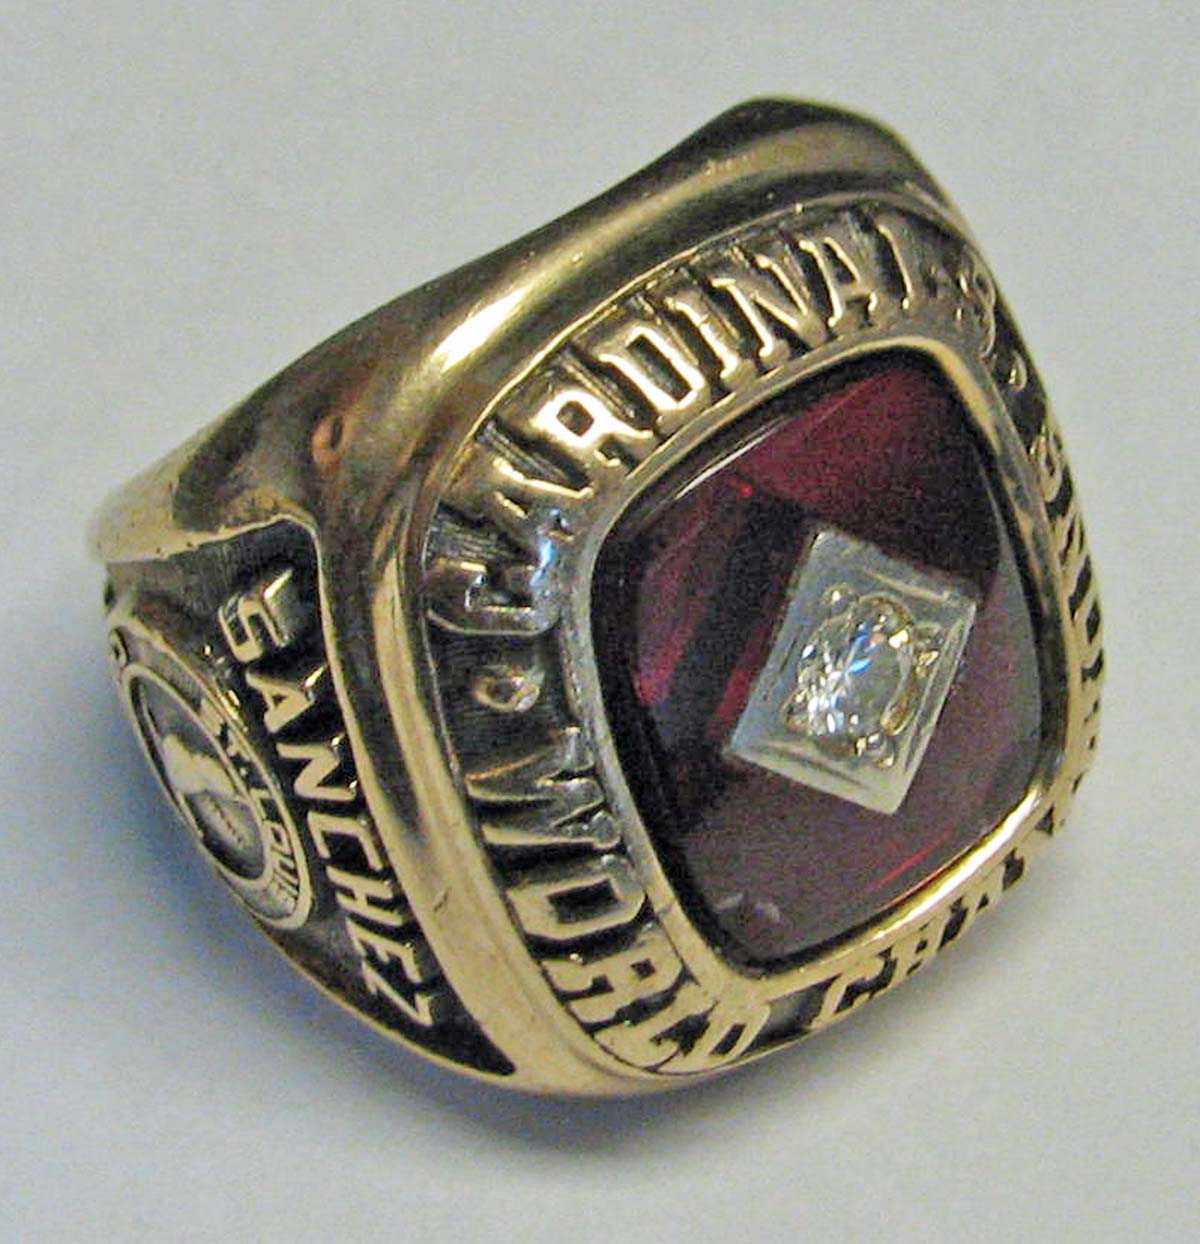 1982 St. Louis Cardinals World Series Championship Ring - http